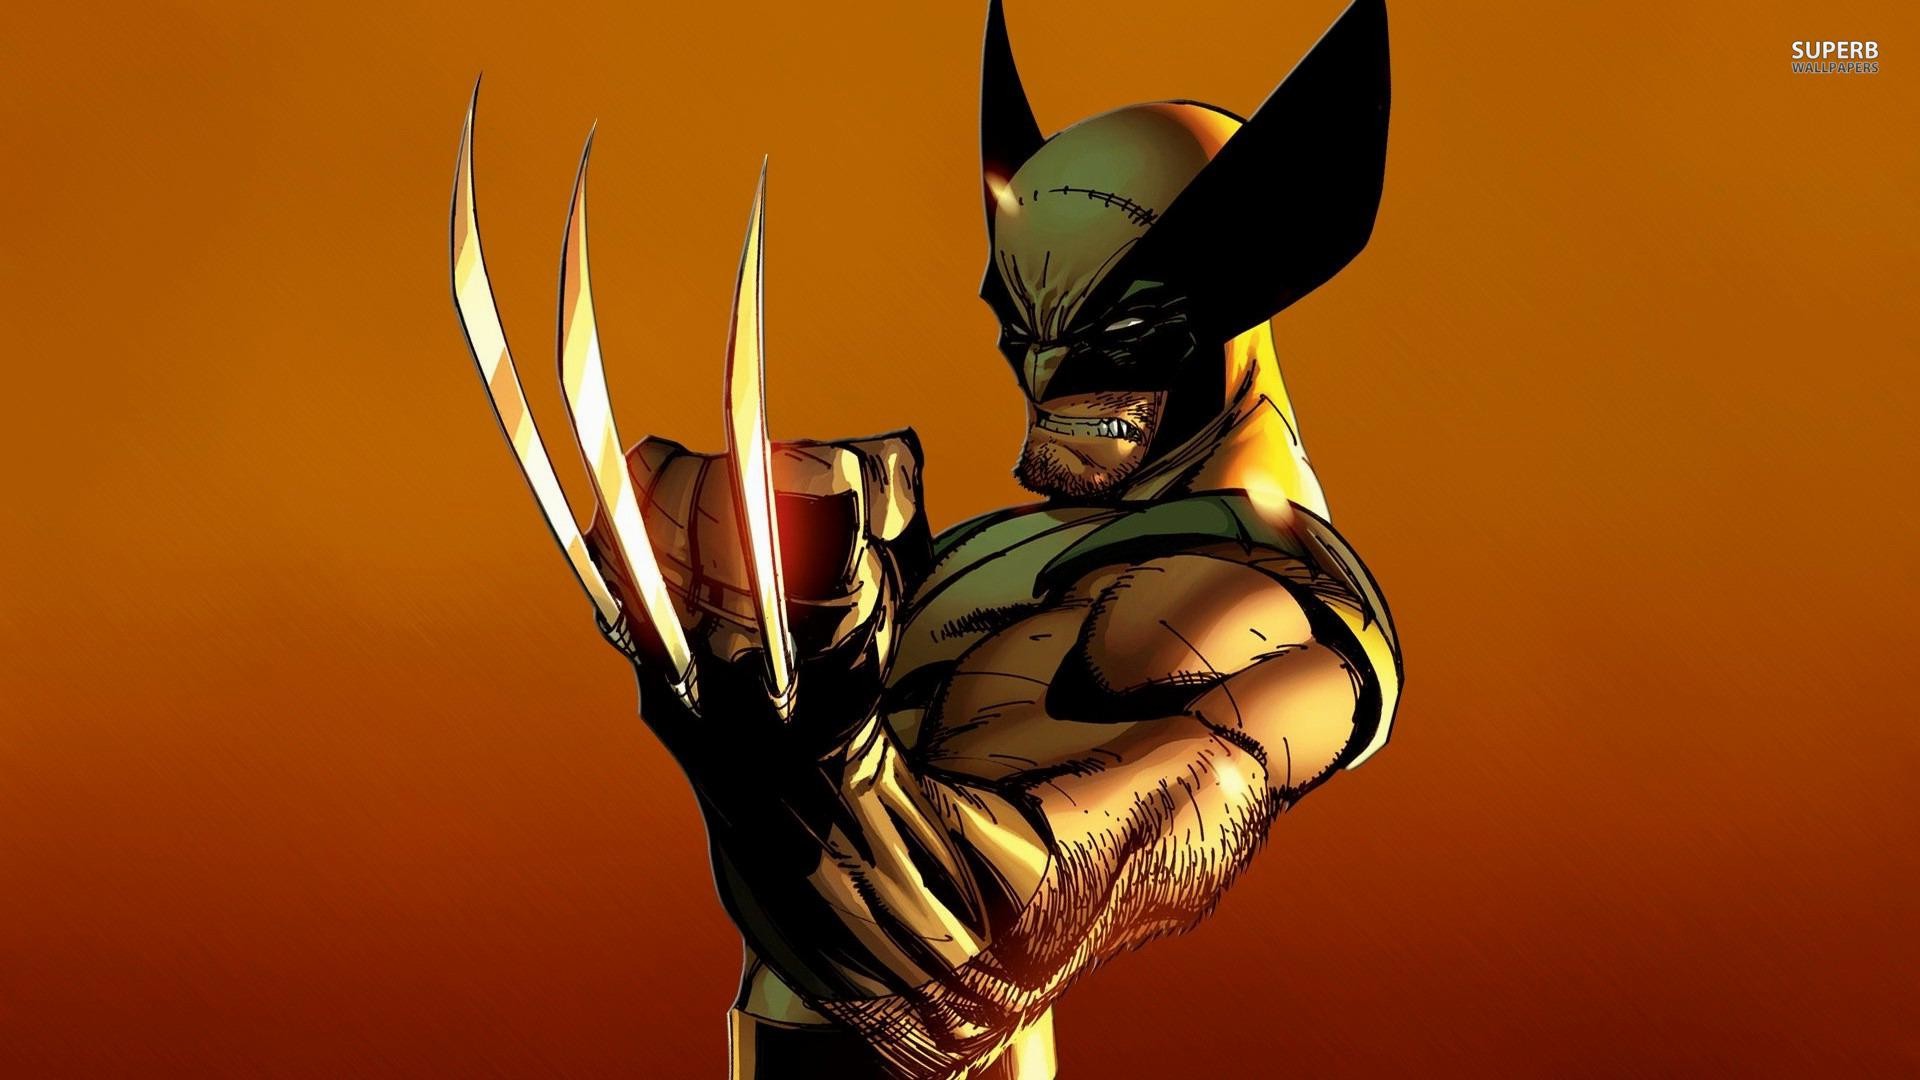 1920x1080 The Wolverine Movie Poster HD desktop wallpaper : High 1680Ã1050 Wolverine  Images Wallpapers (